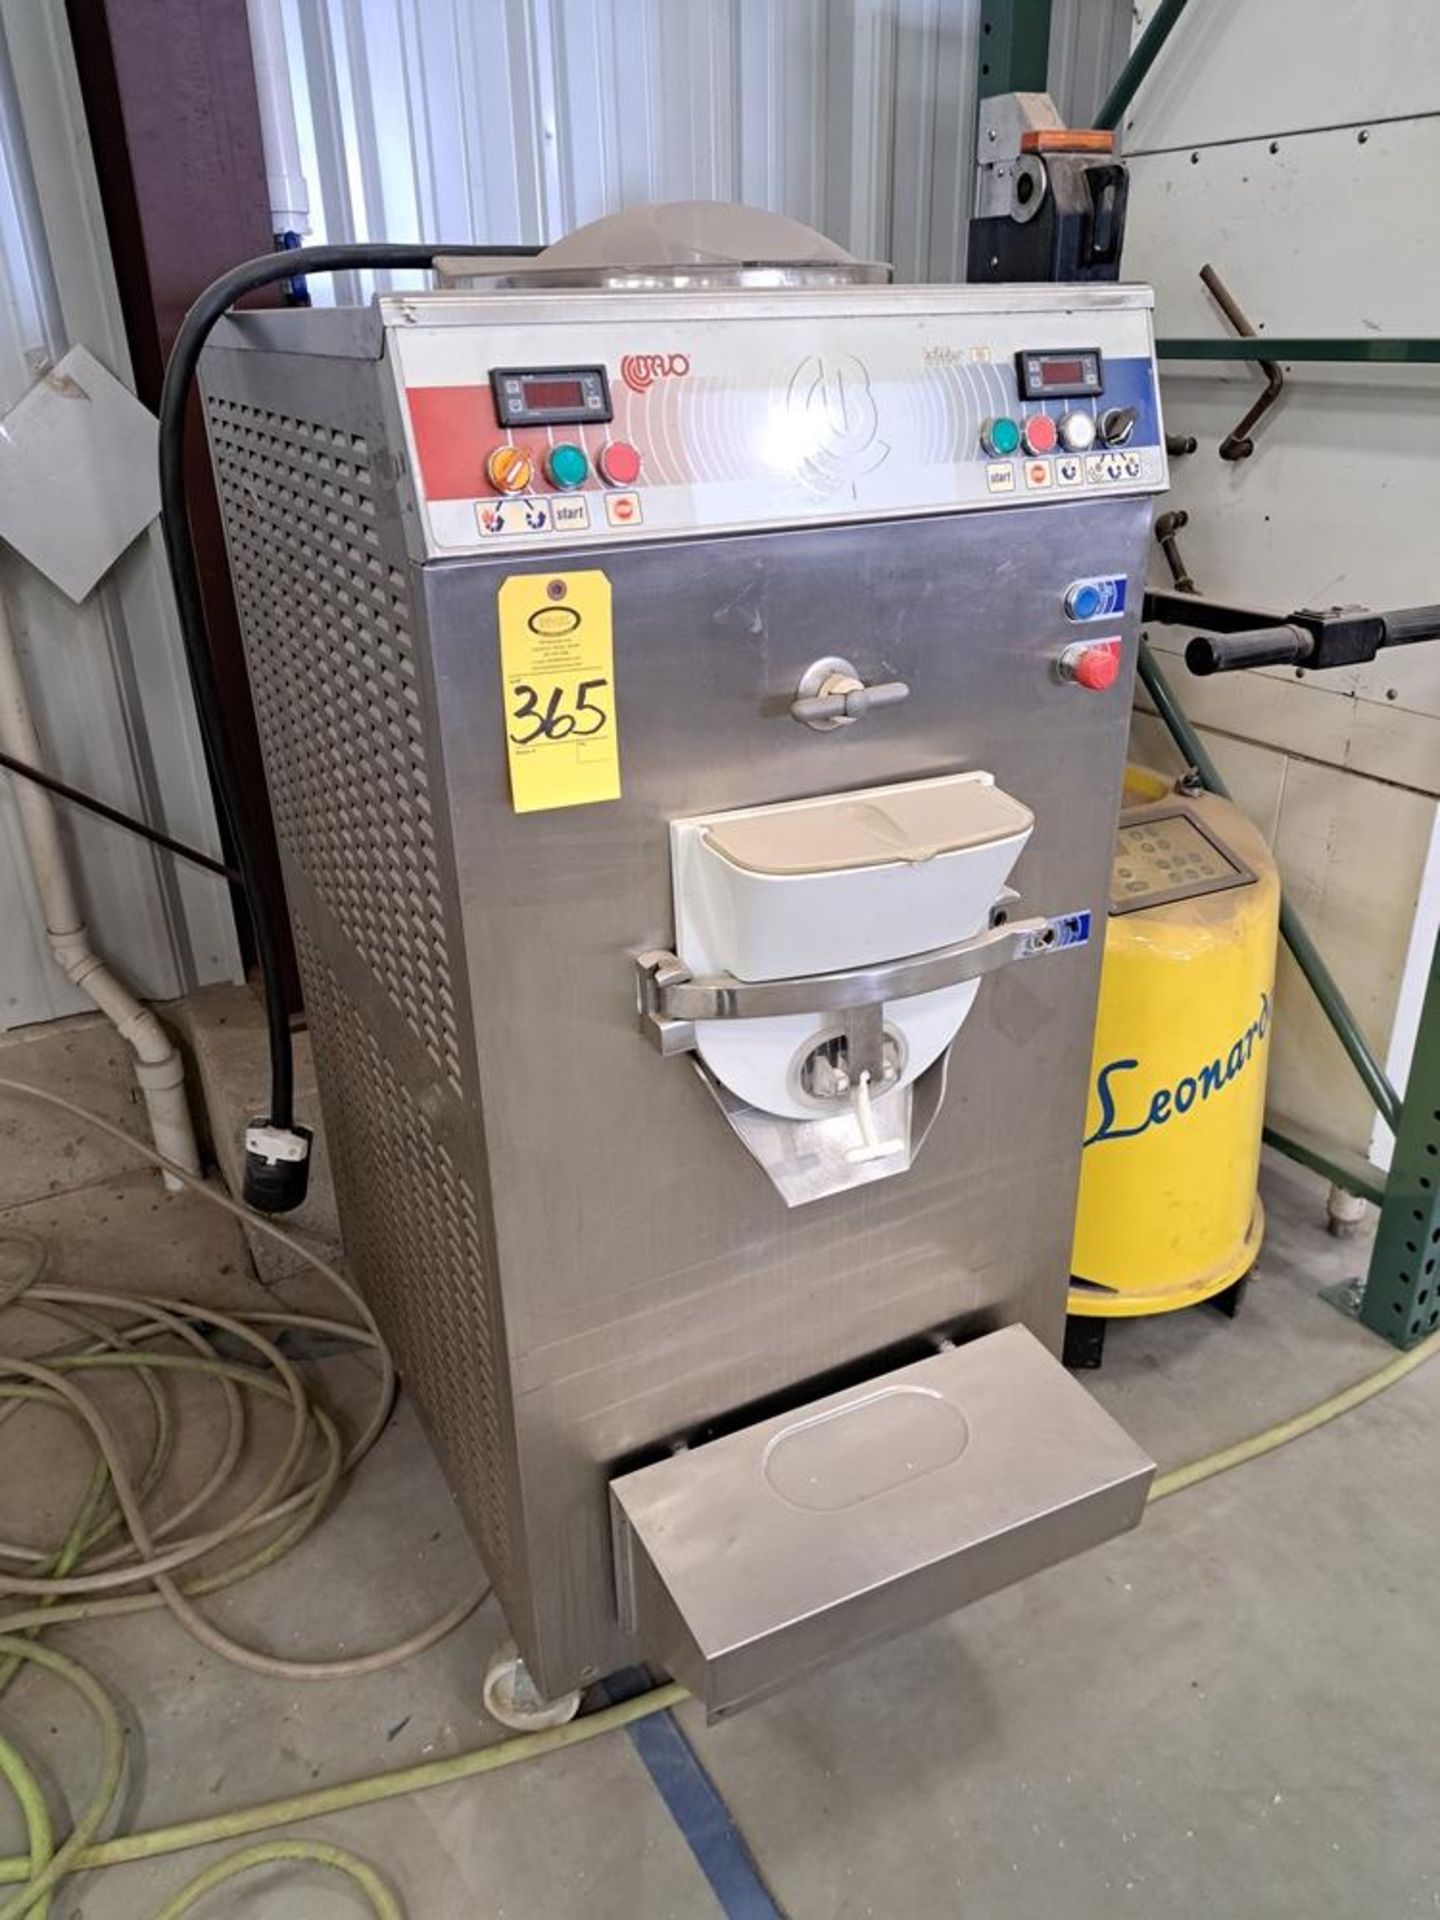 Bravo Mdl. M60 Ice Cream Freezer/Dispenser, Ser. #3619895, 220 volts, 3 phase (Required Loading Fee: